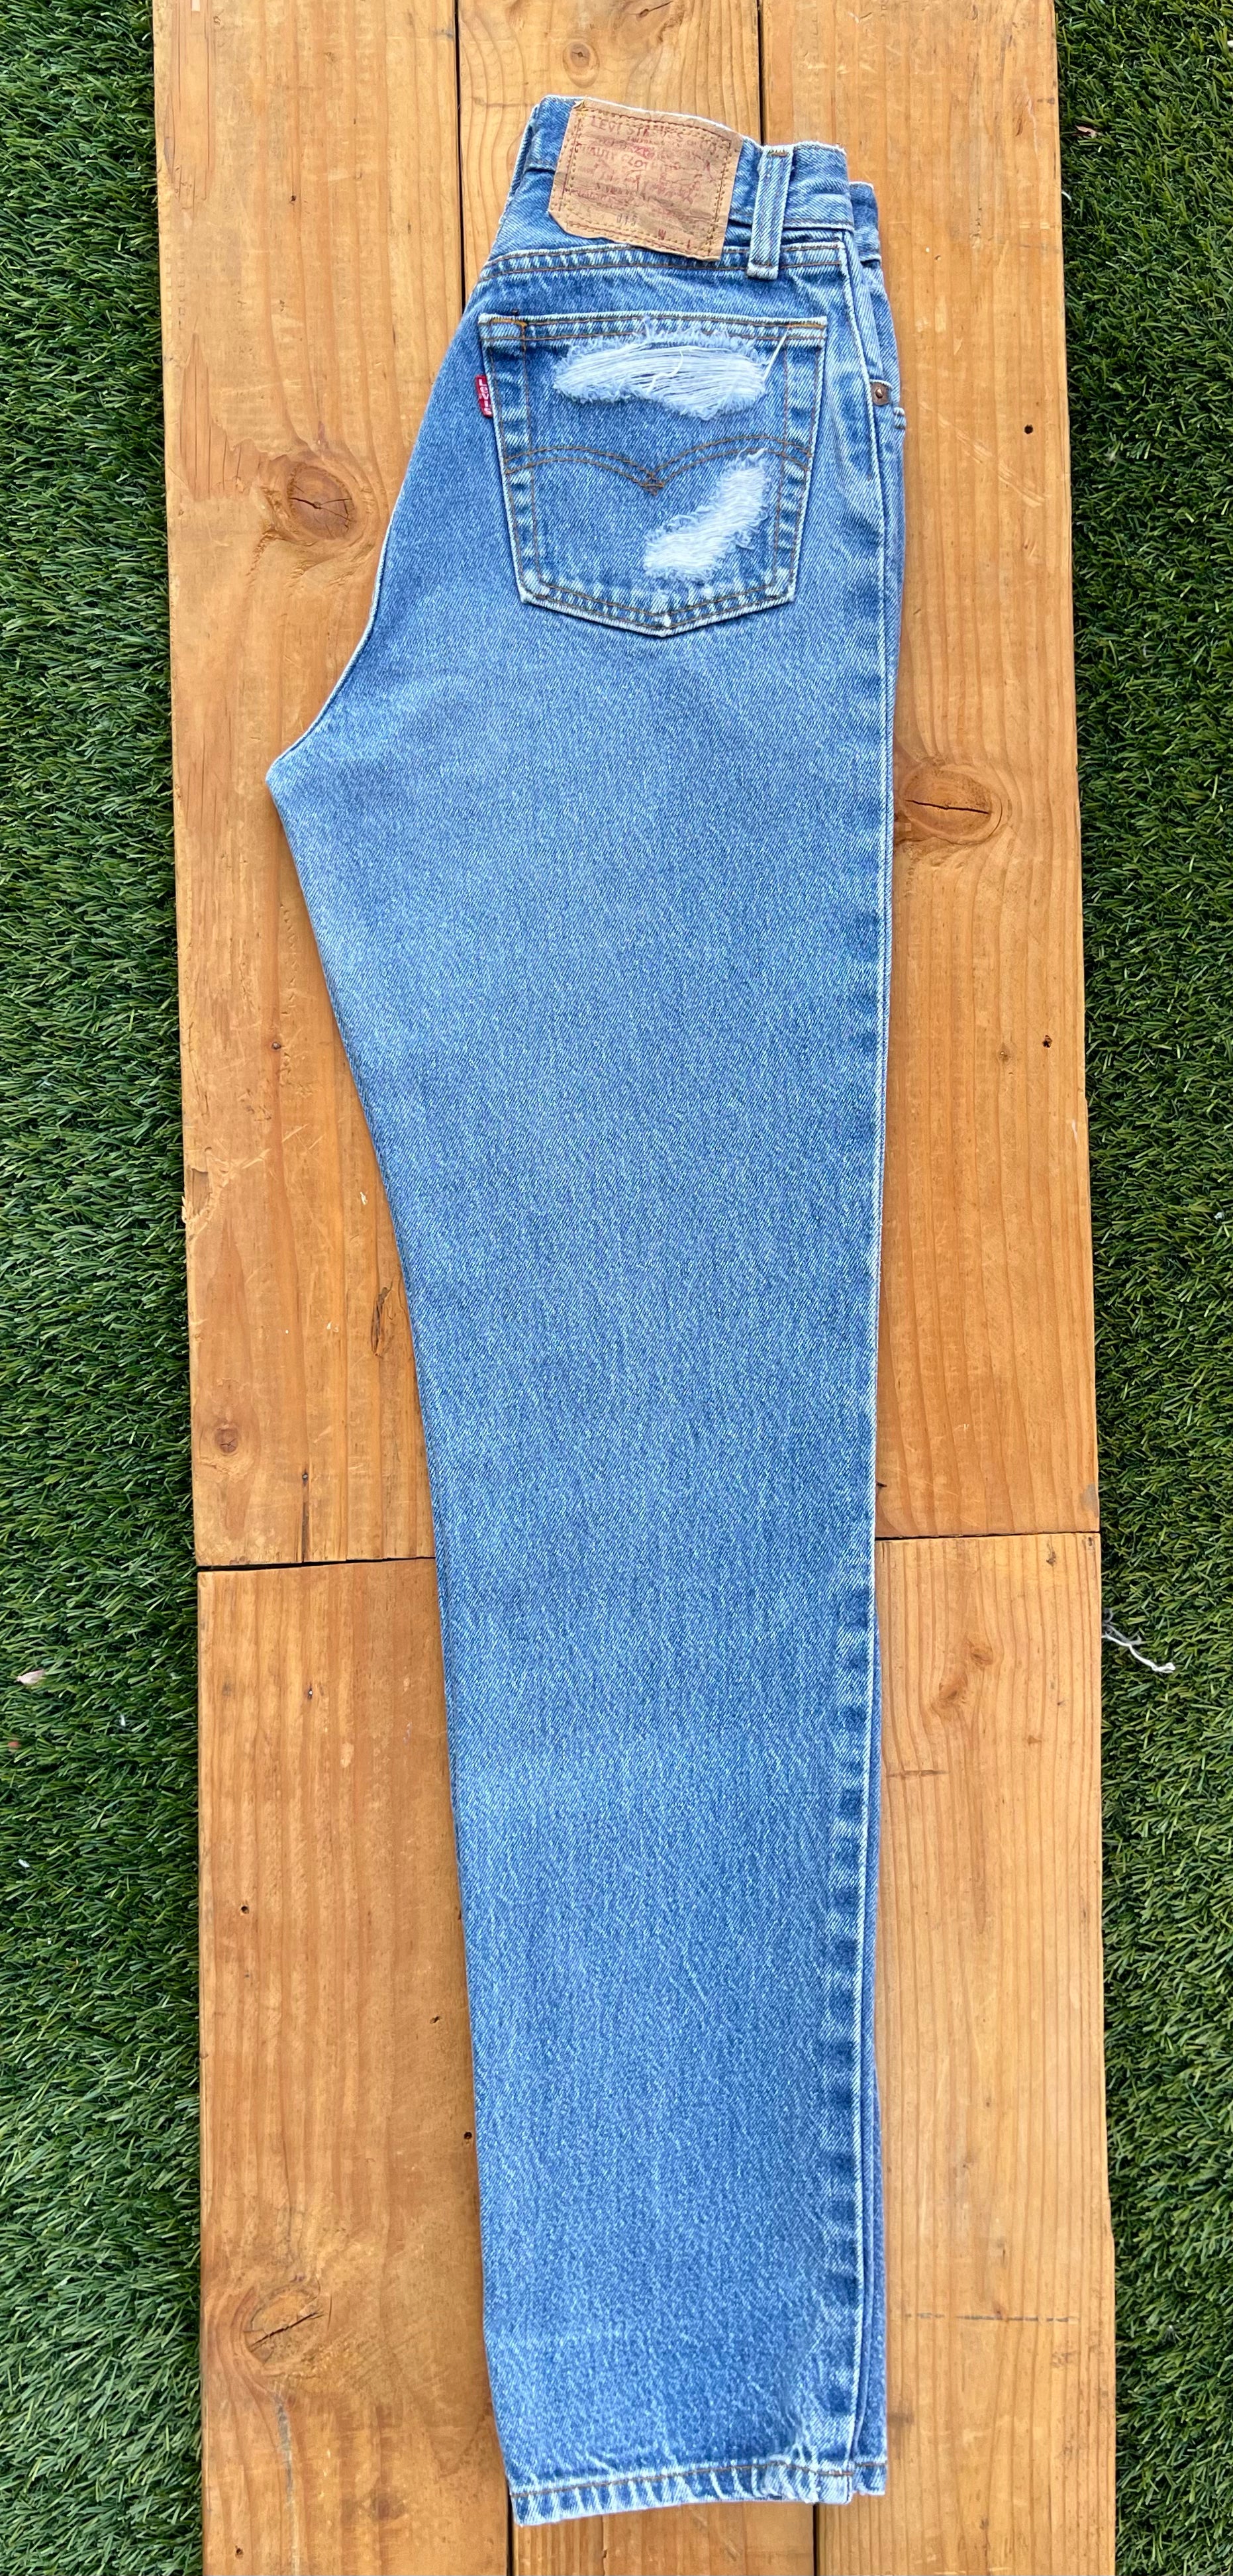 W25 501 Vintage Levi’s Jean